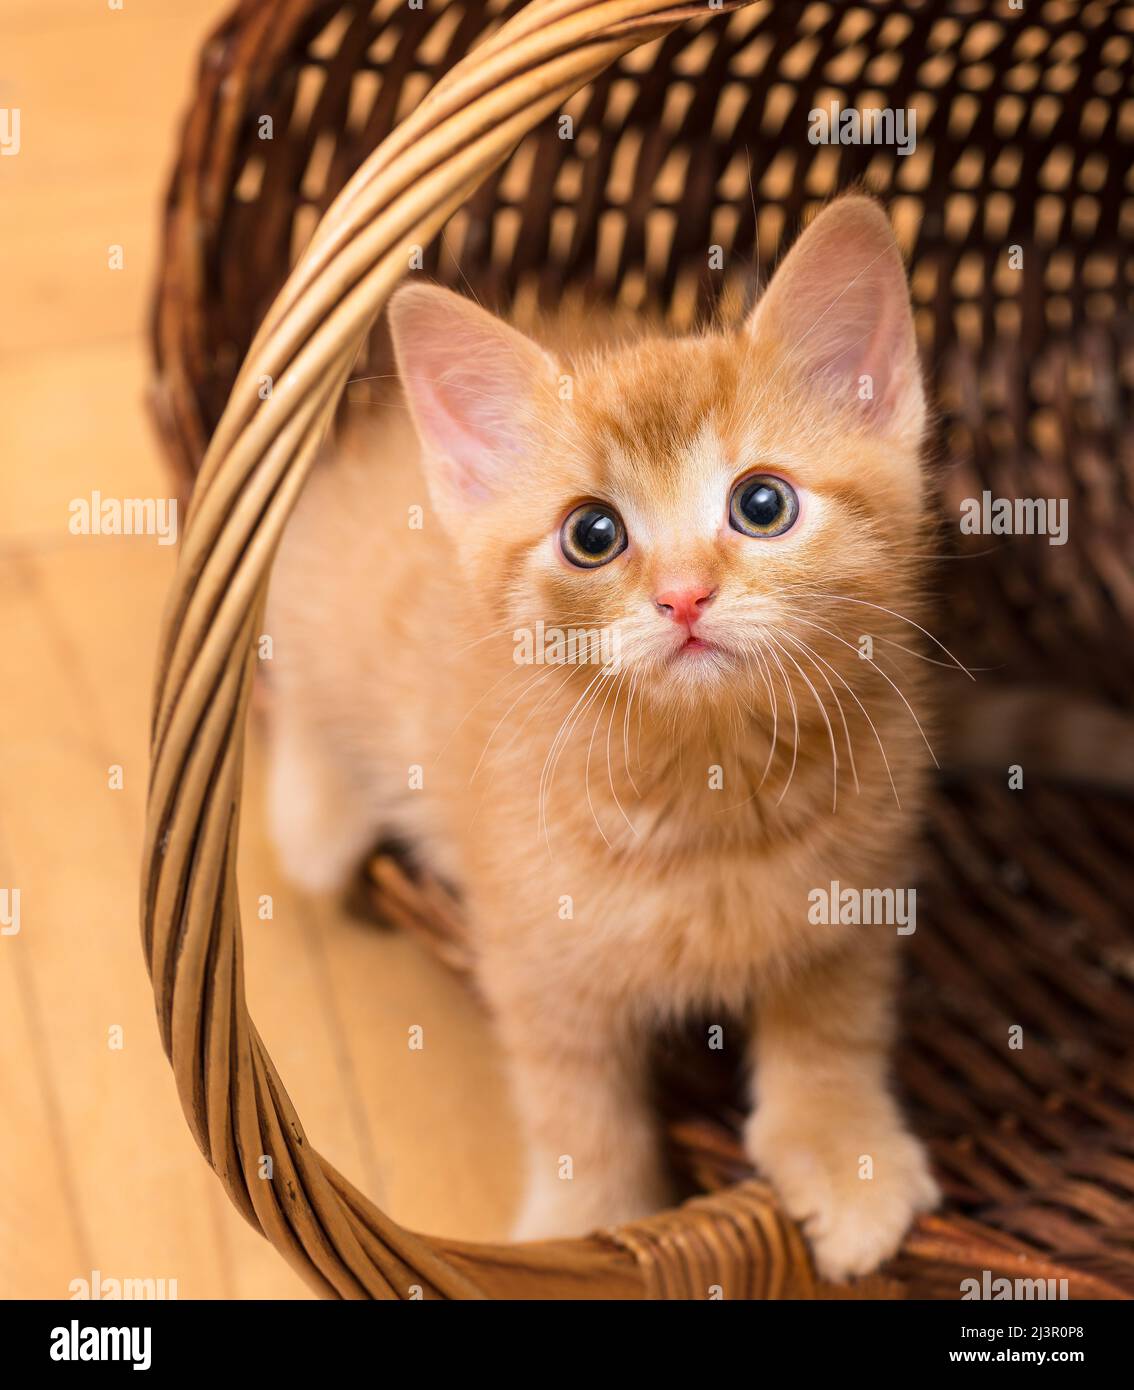 Lindo gatito de tabby de jengibre tímido de pie en una cesta de mimbre tumeada. Casa gato. Felis silvestris catus. Primer plano Un hermoso gatito curioso con ojos anchos. Foto de stock